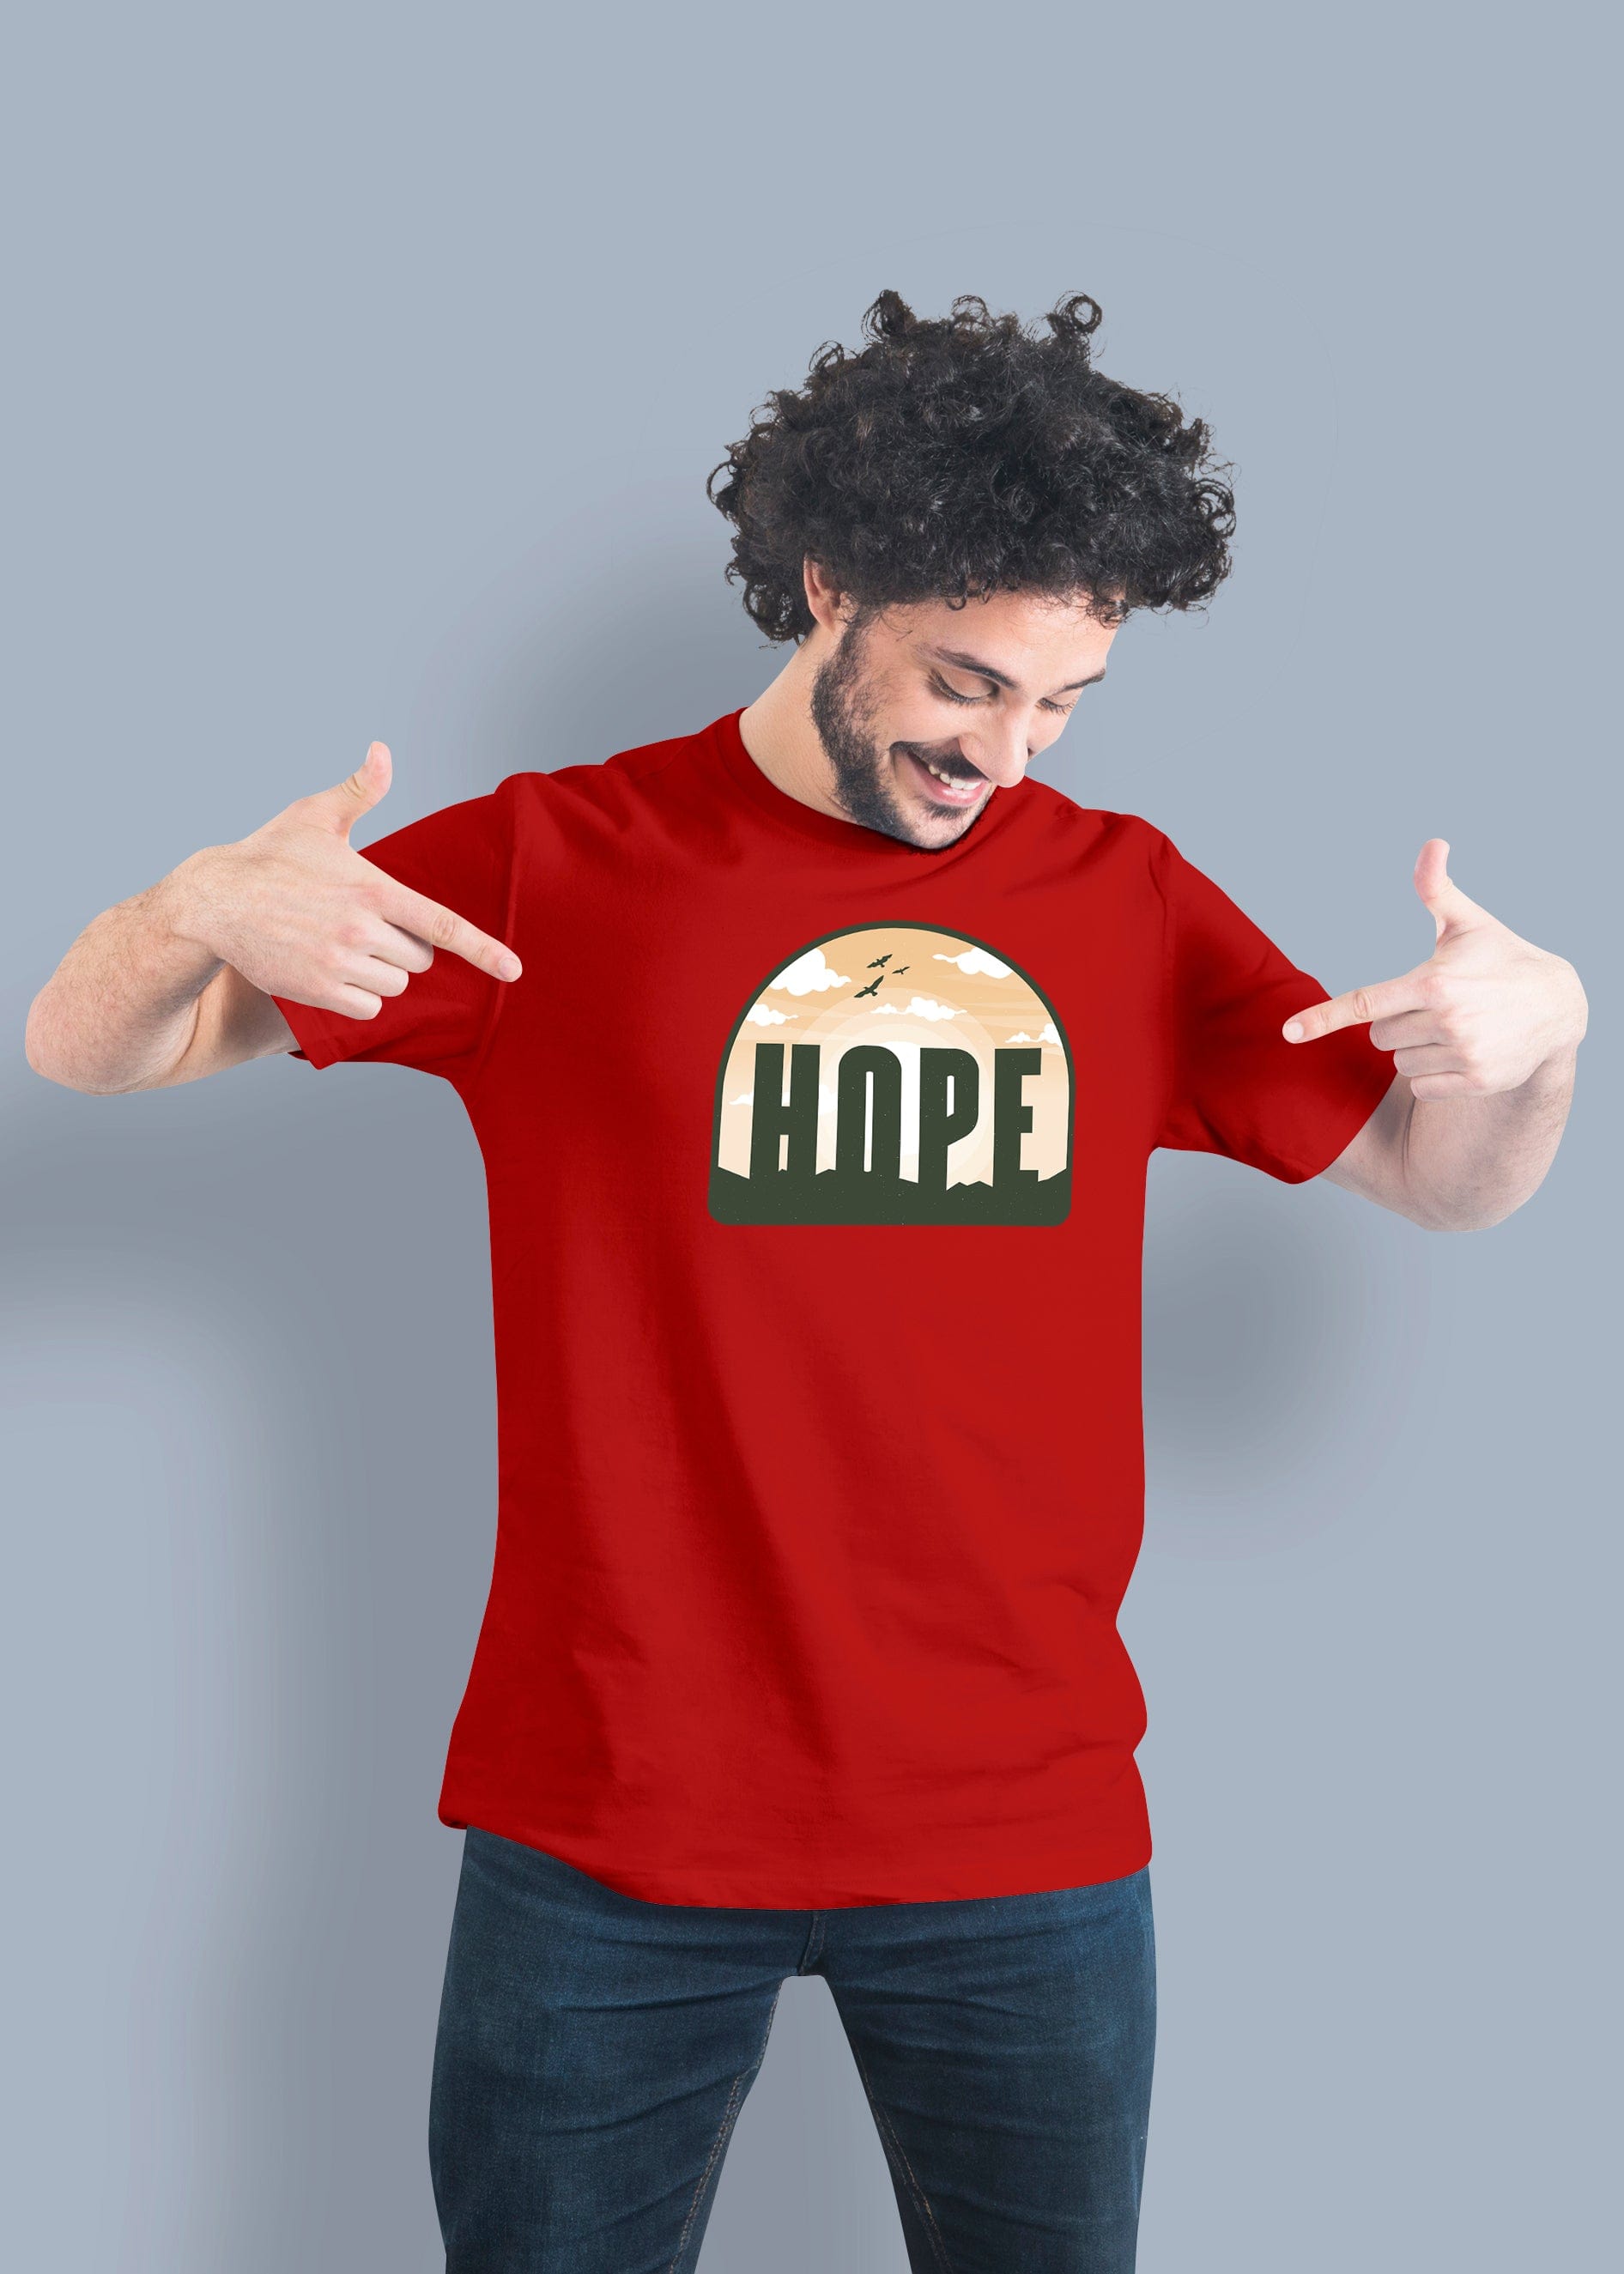 Hope Printed Half Sleeve Premium Cotton T-shirt For Men